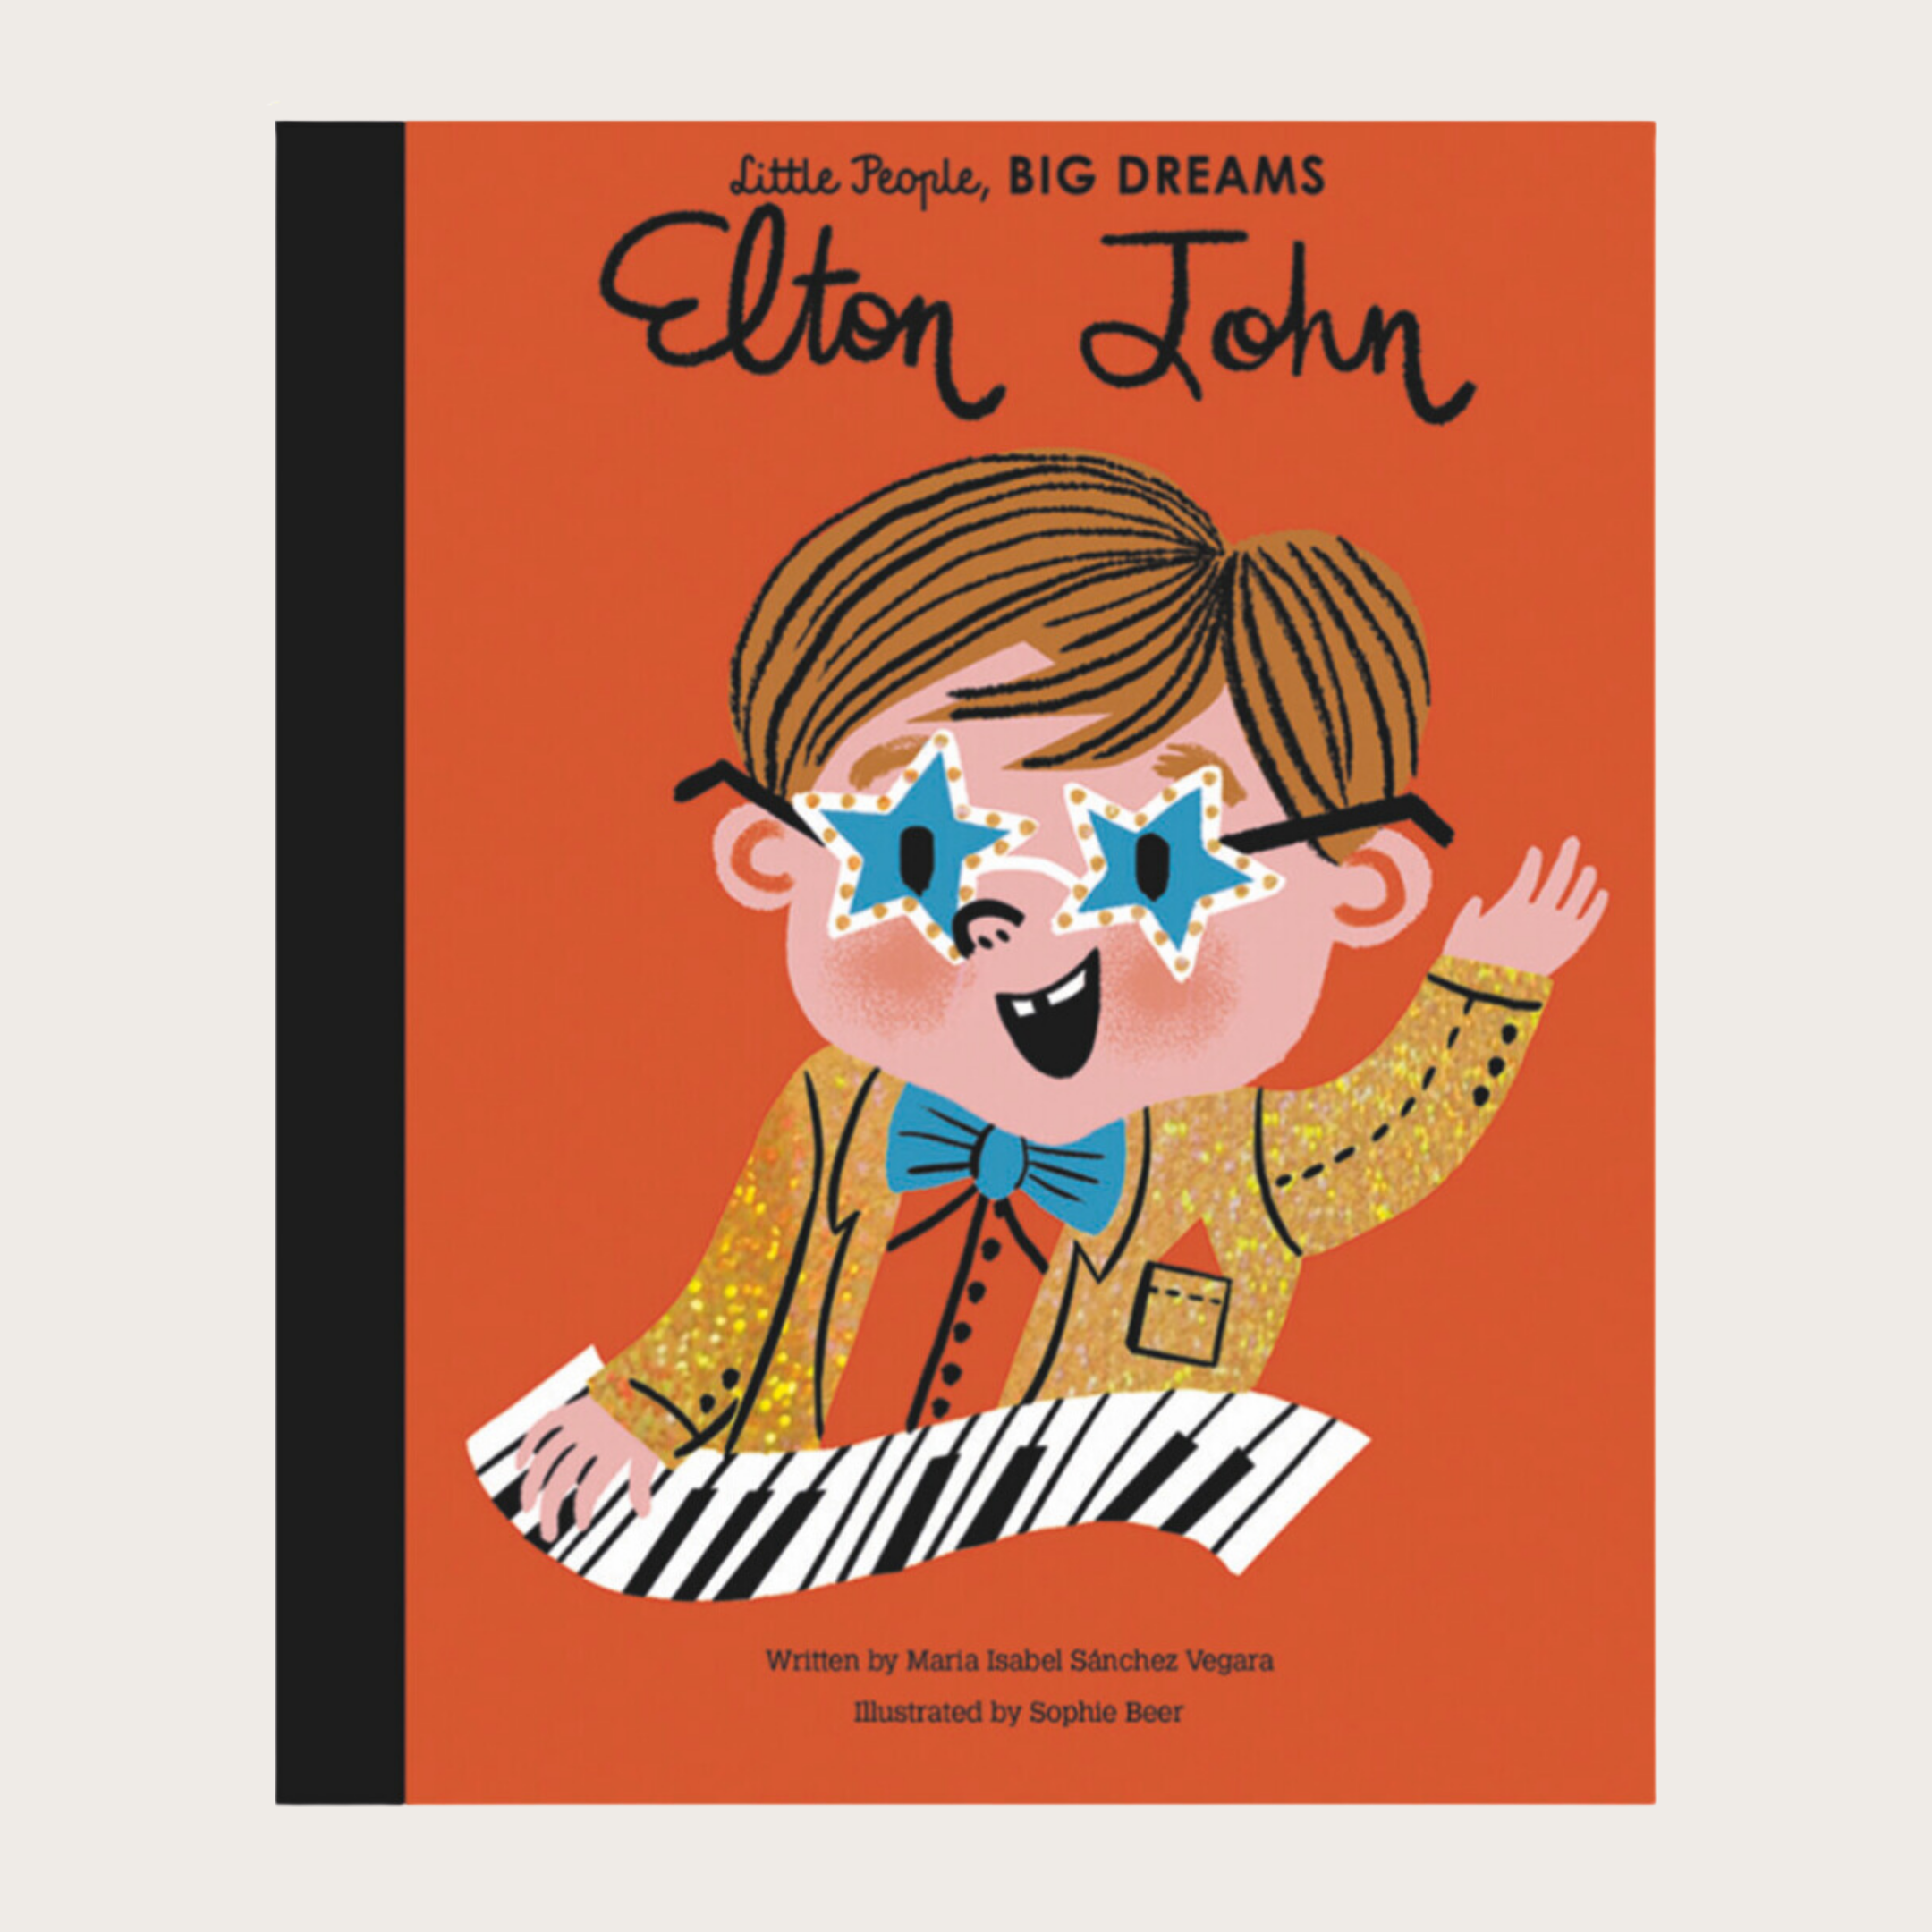 Little People, Big Dreams: Elton John – Comerford Collection